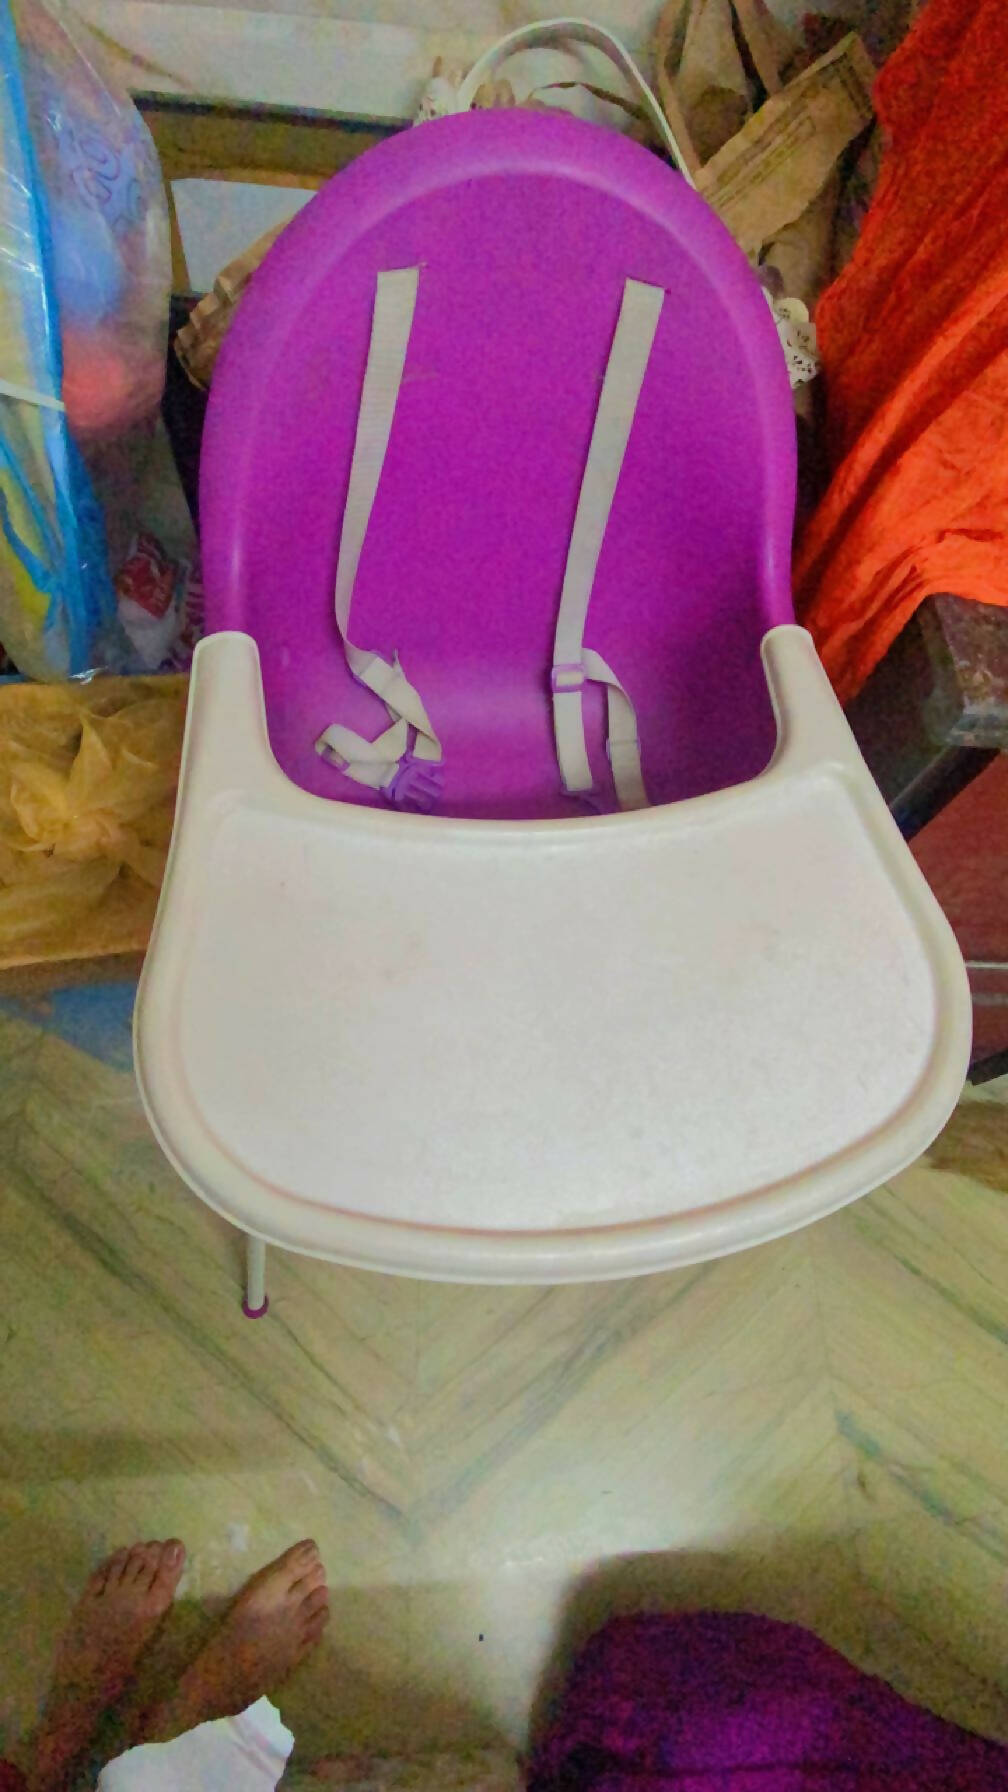 MOTHERCARE Baby high chair - PyaraBaby